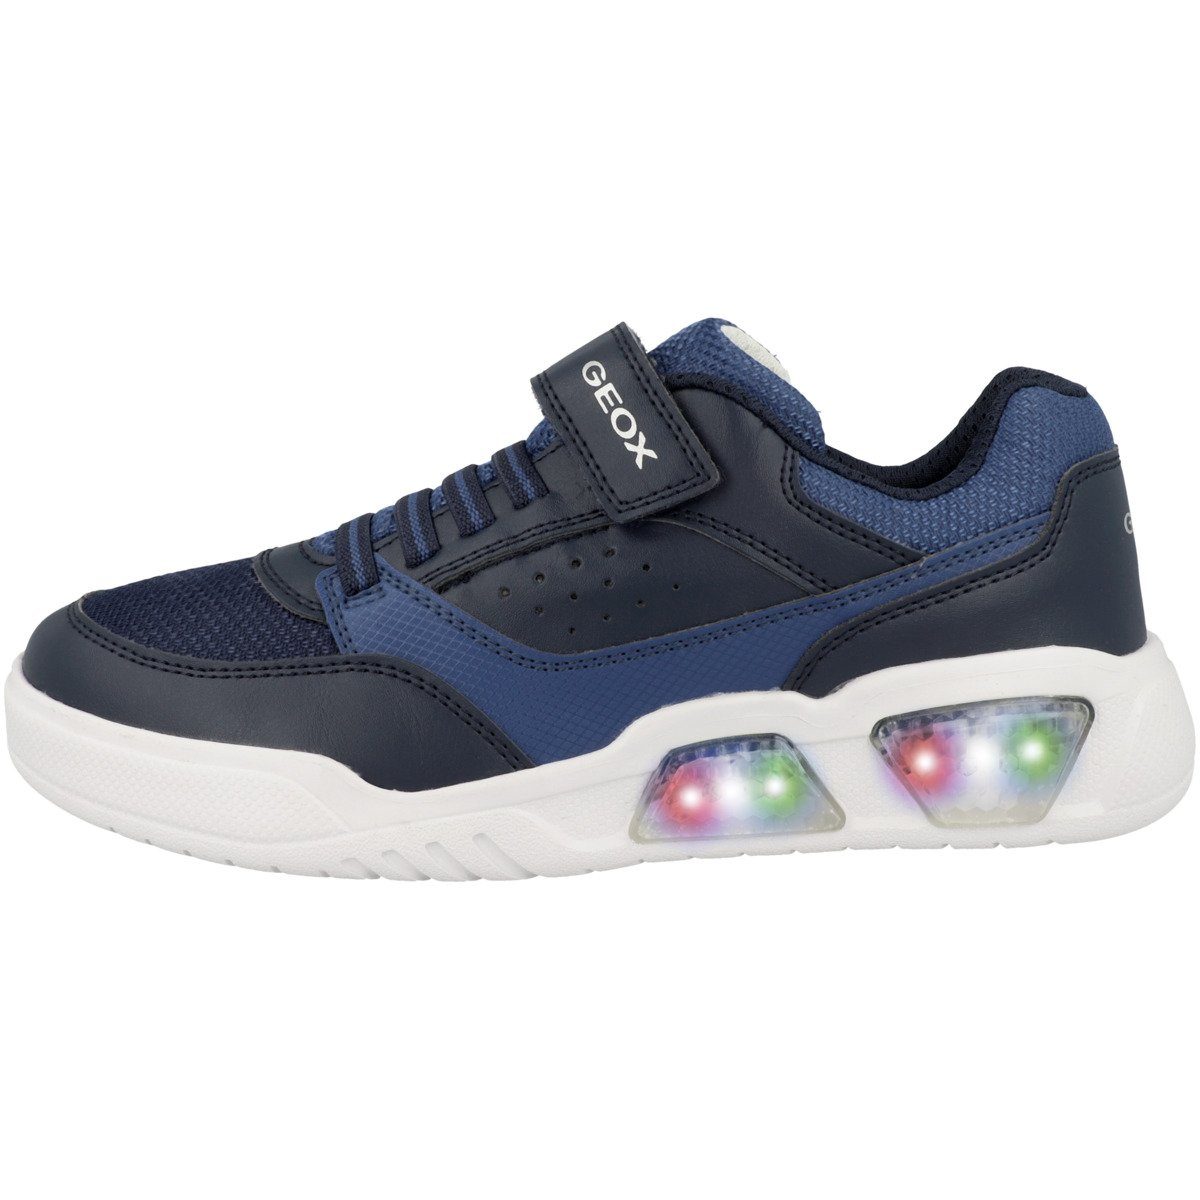 Jungen Sneaker LED Illuminus Geox Funktion B dunkelblau B. J